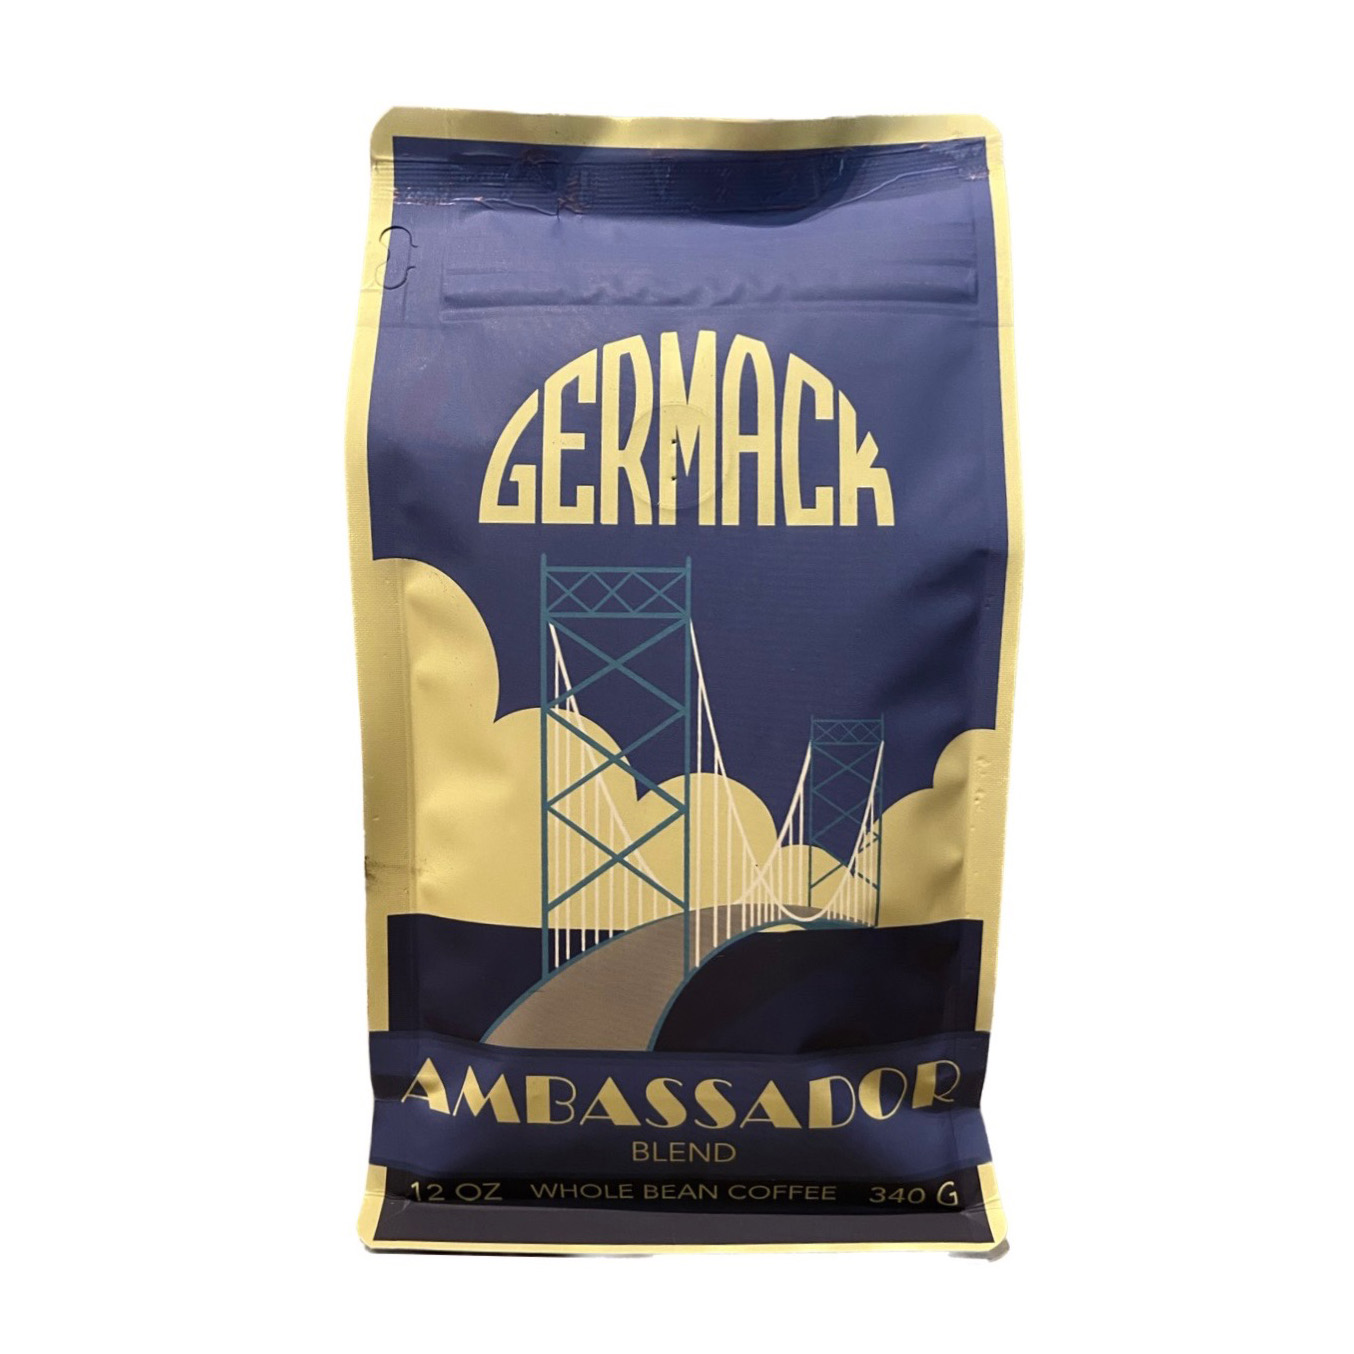 Picture Germack Coffee Blend (12 oz.) - Ambassador